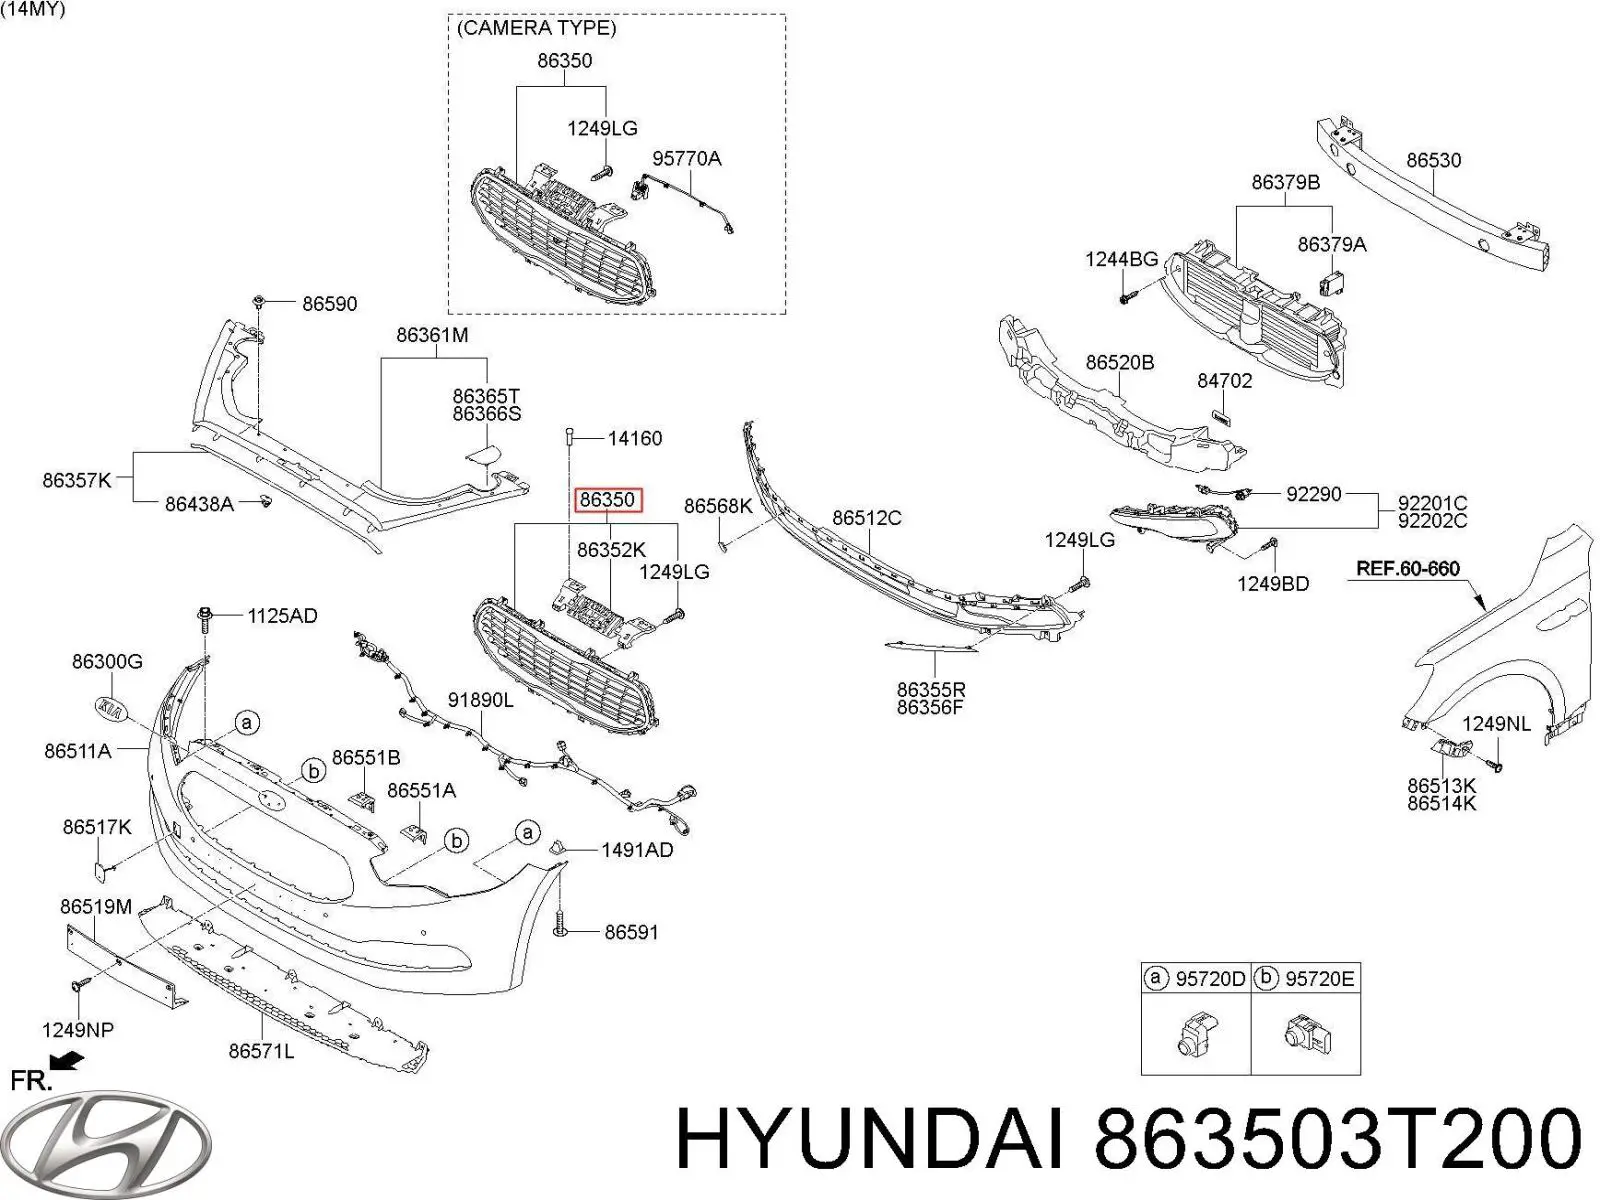 863503T200 Hyundai/Kia rejilla de radiador